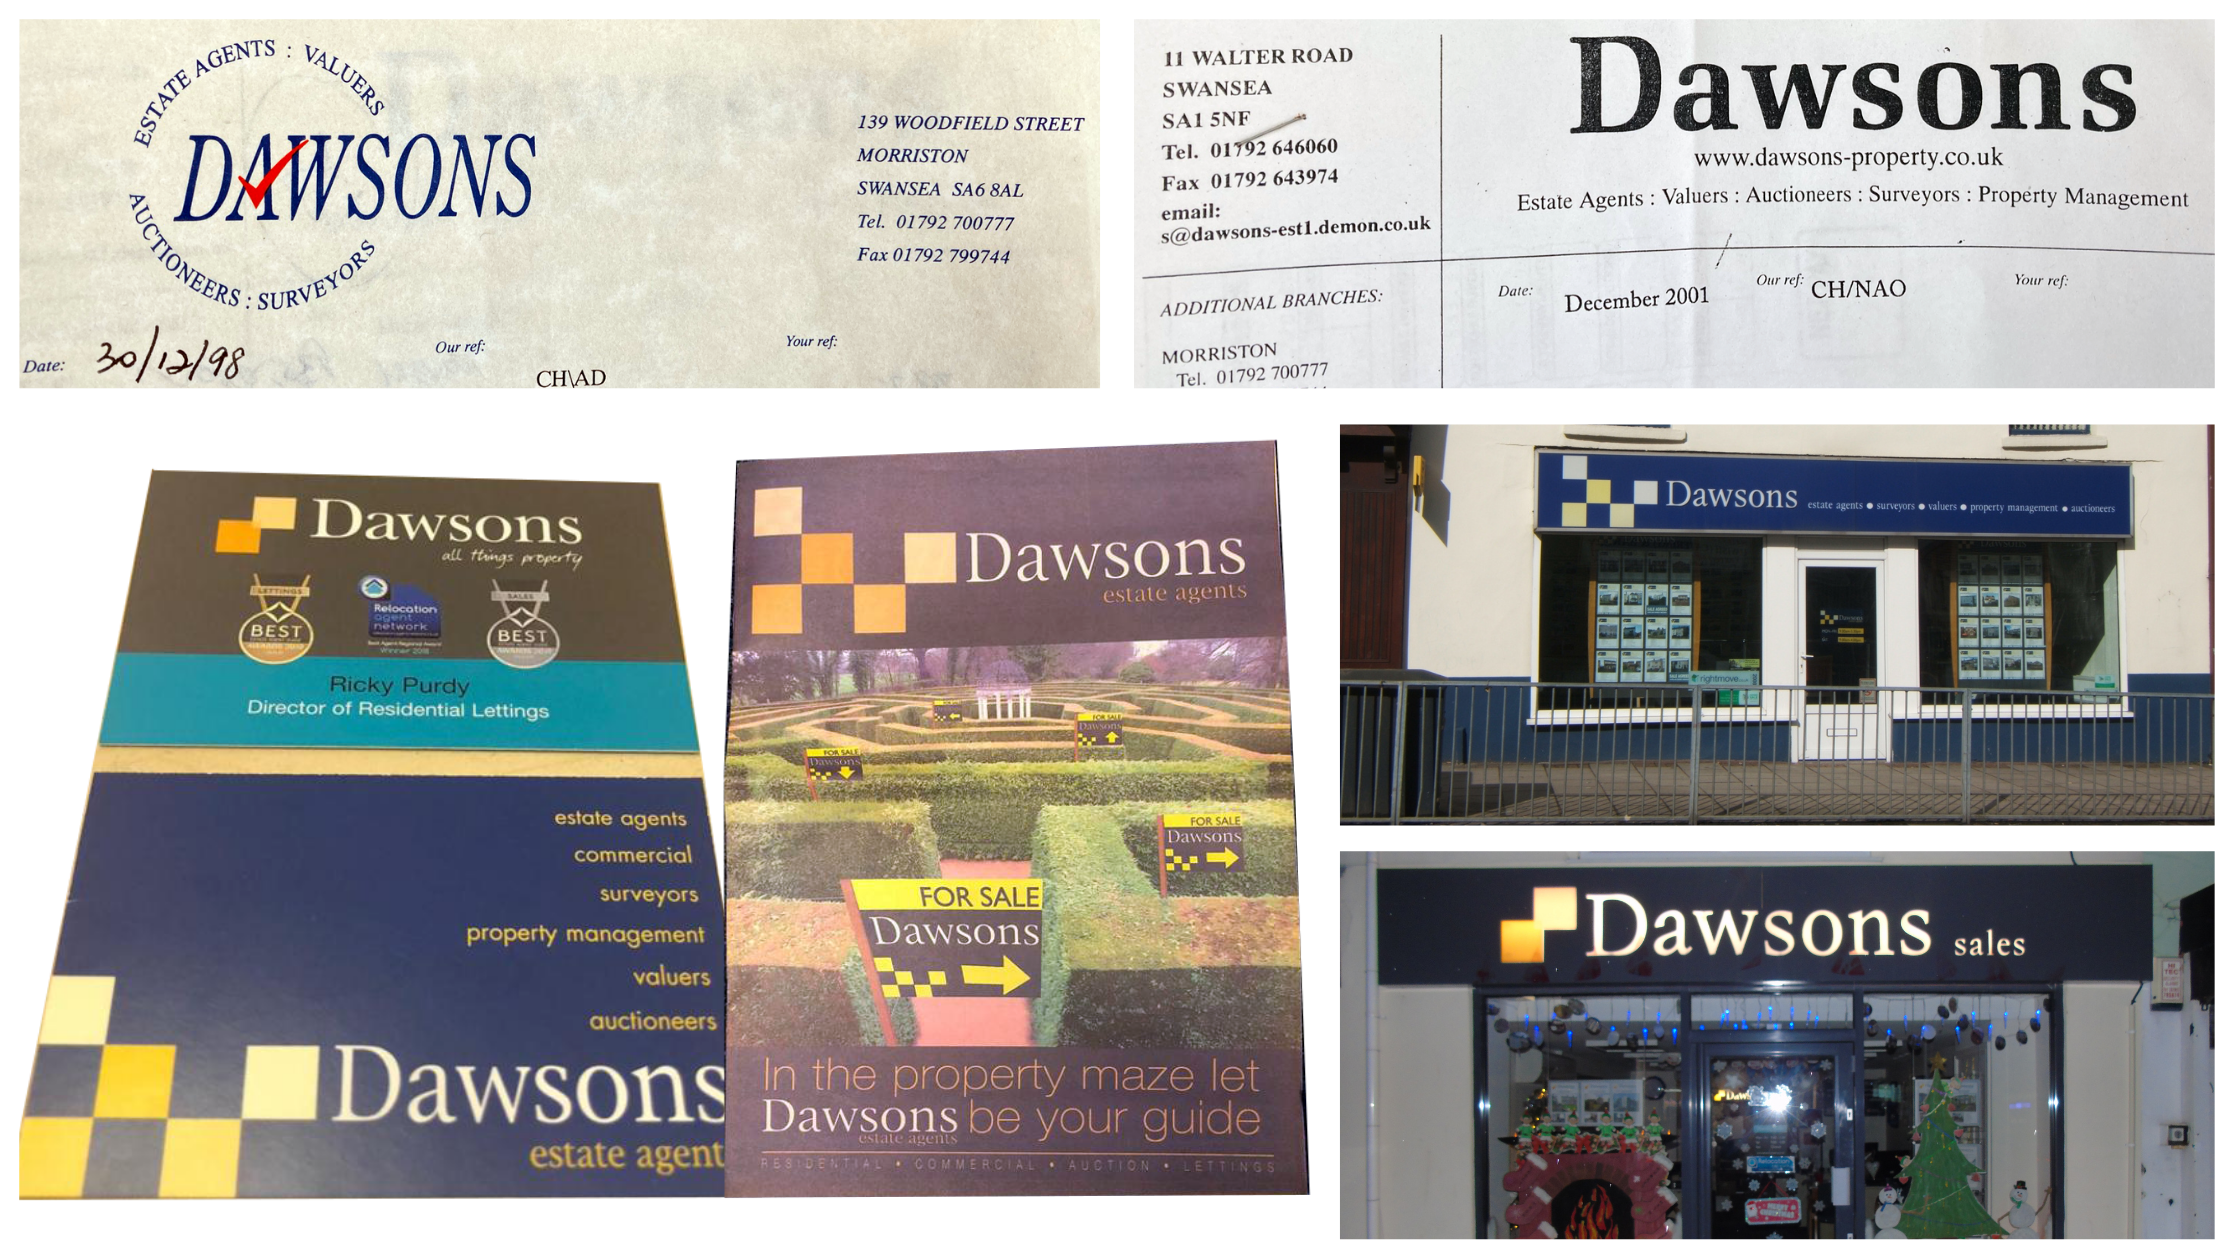 Dawsons branding through the decades